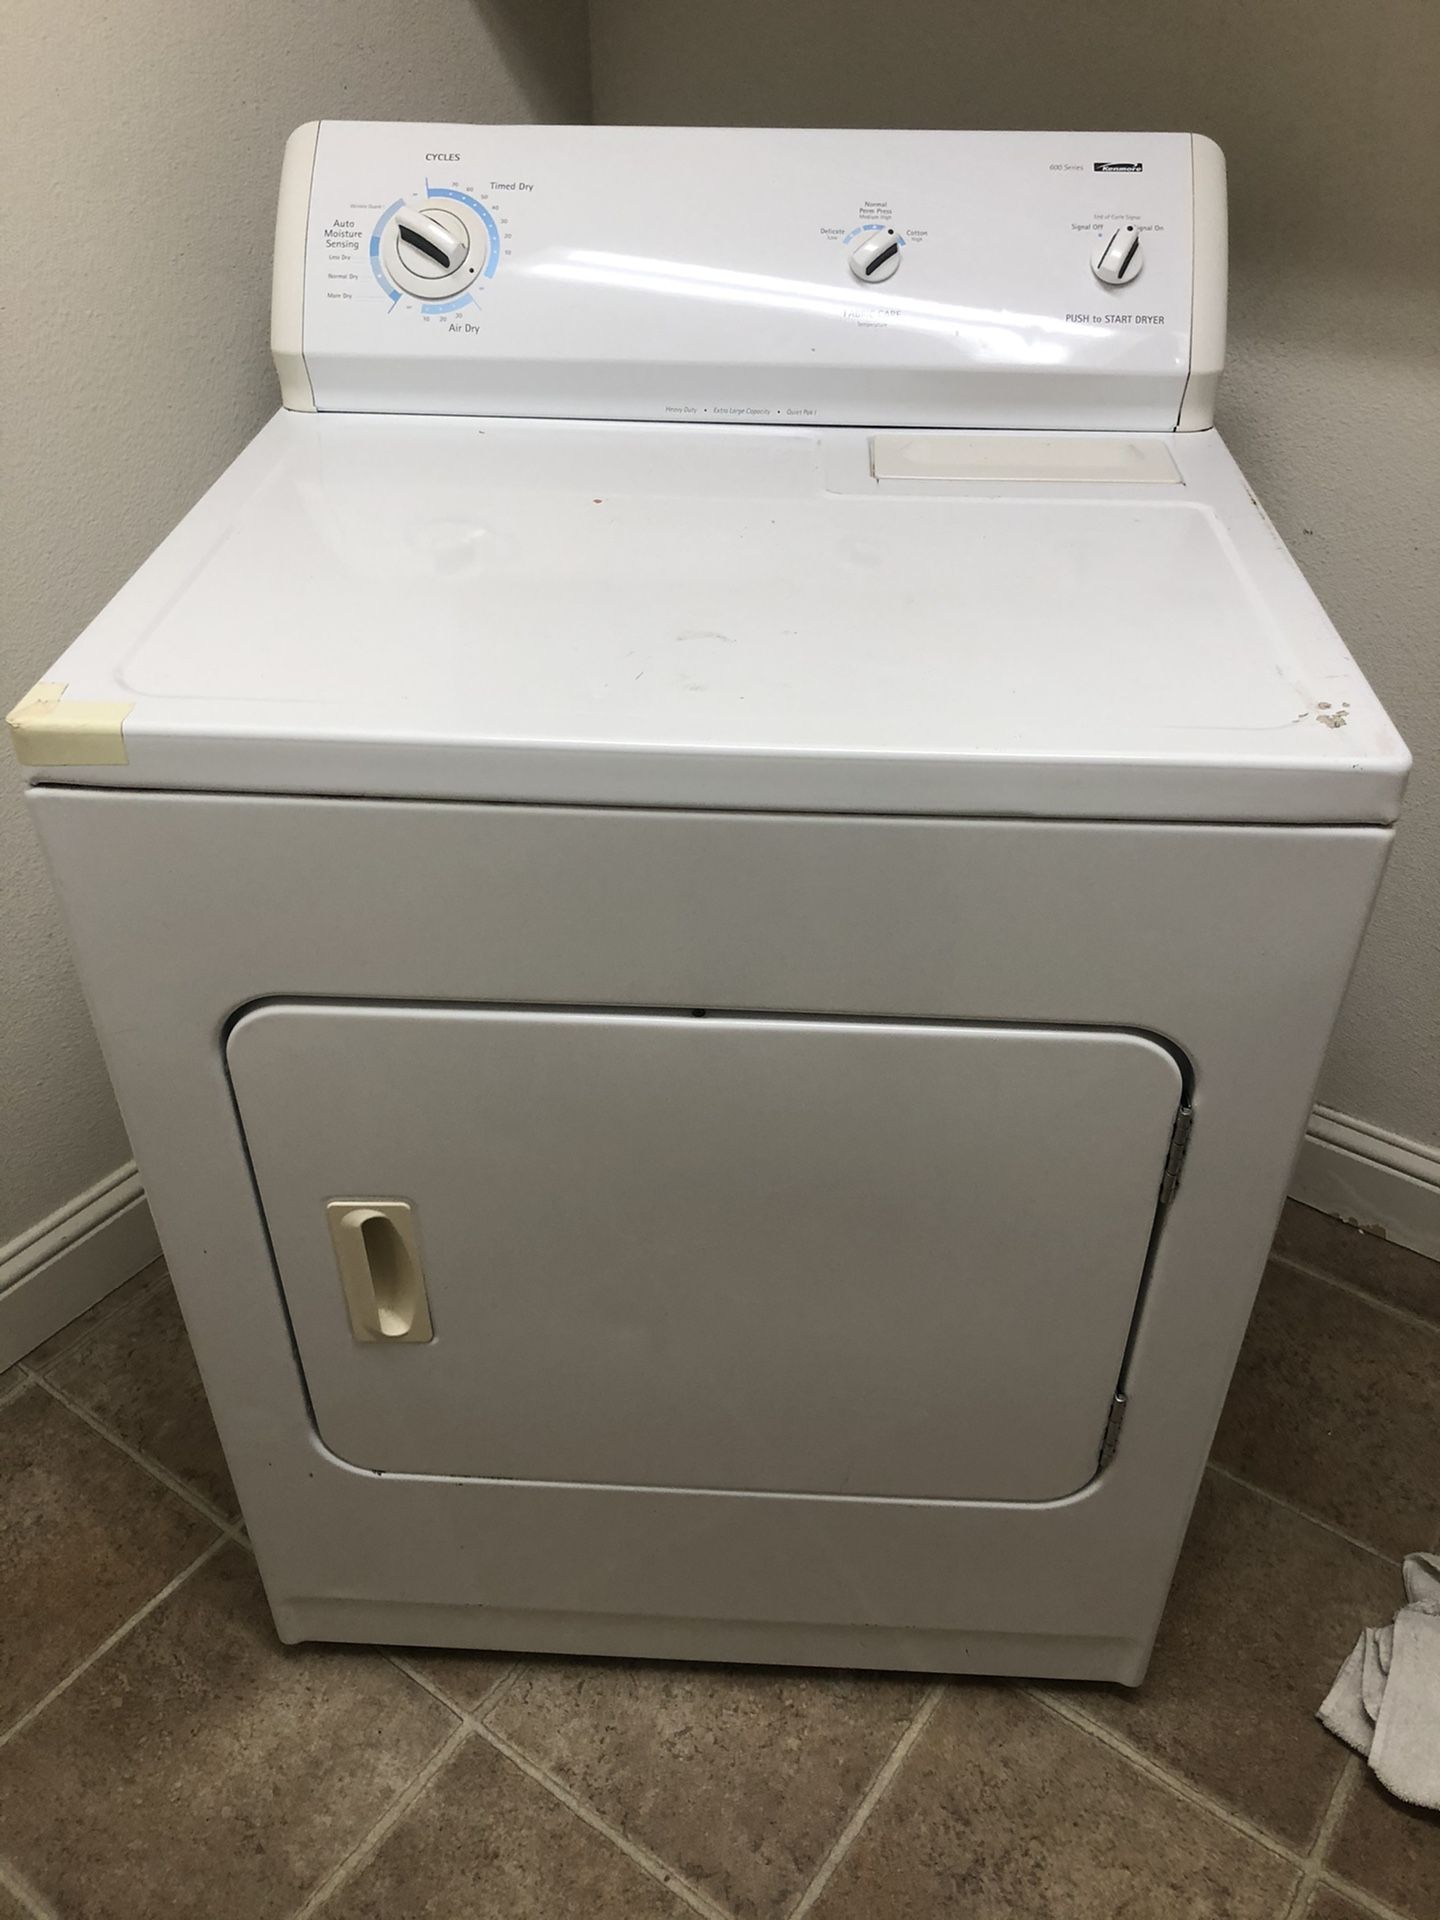 Kenmore 600 series washer